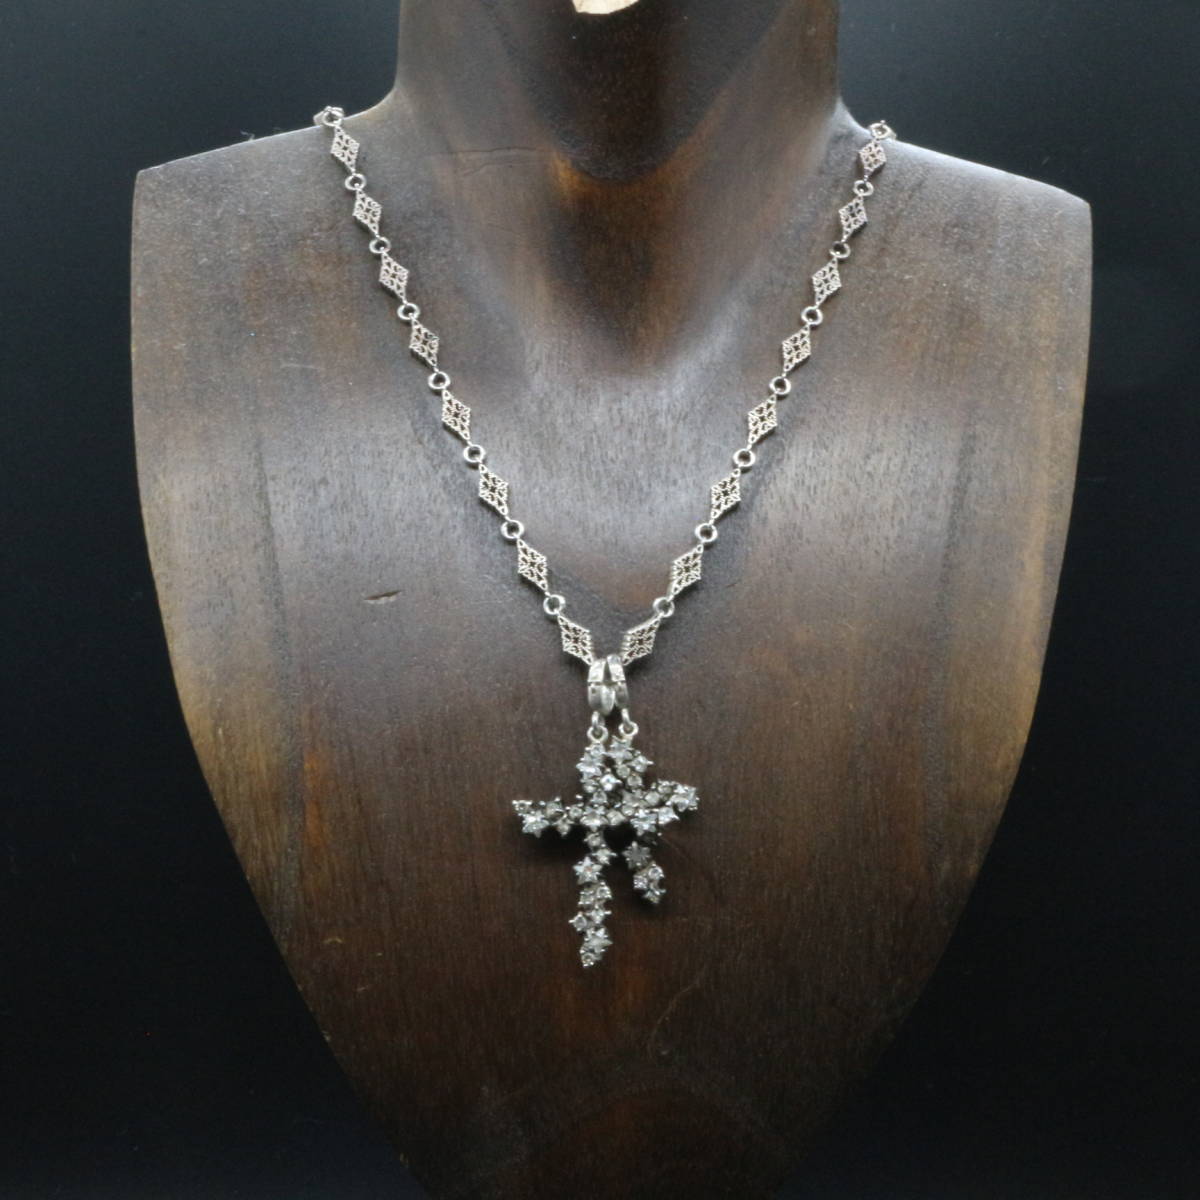 Loree Rodkin / necklace / silver / gothic Cross / 10 character ./ Loree Rodkin / SV925 / box attaching 